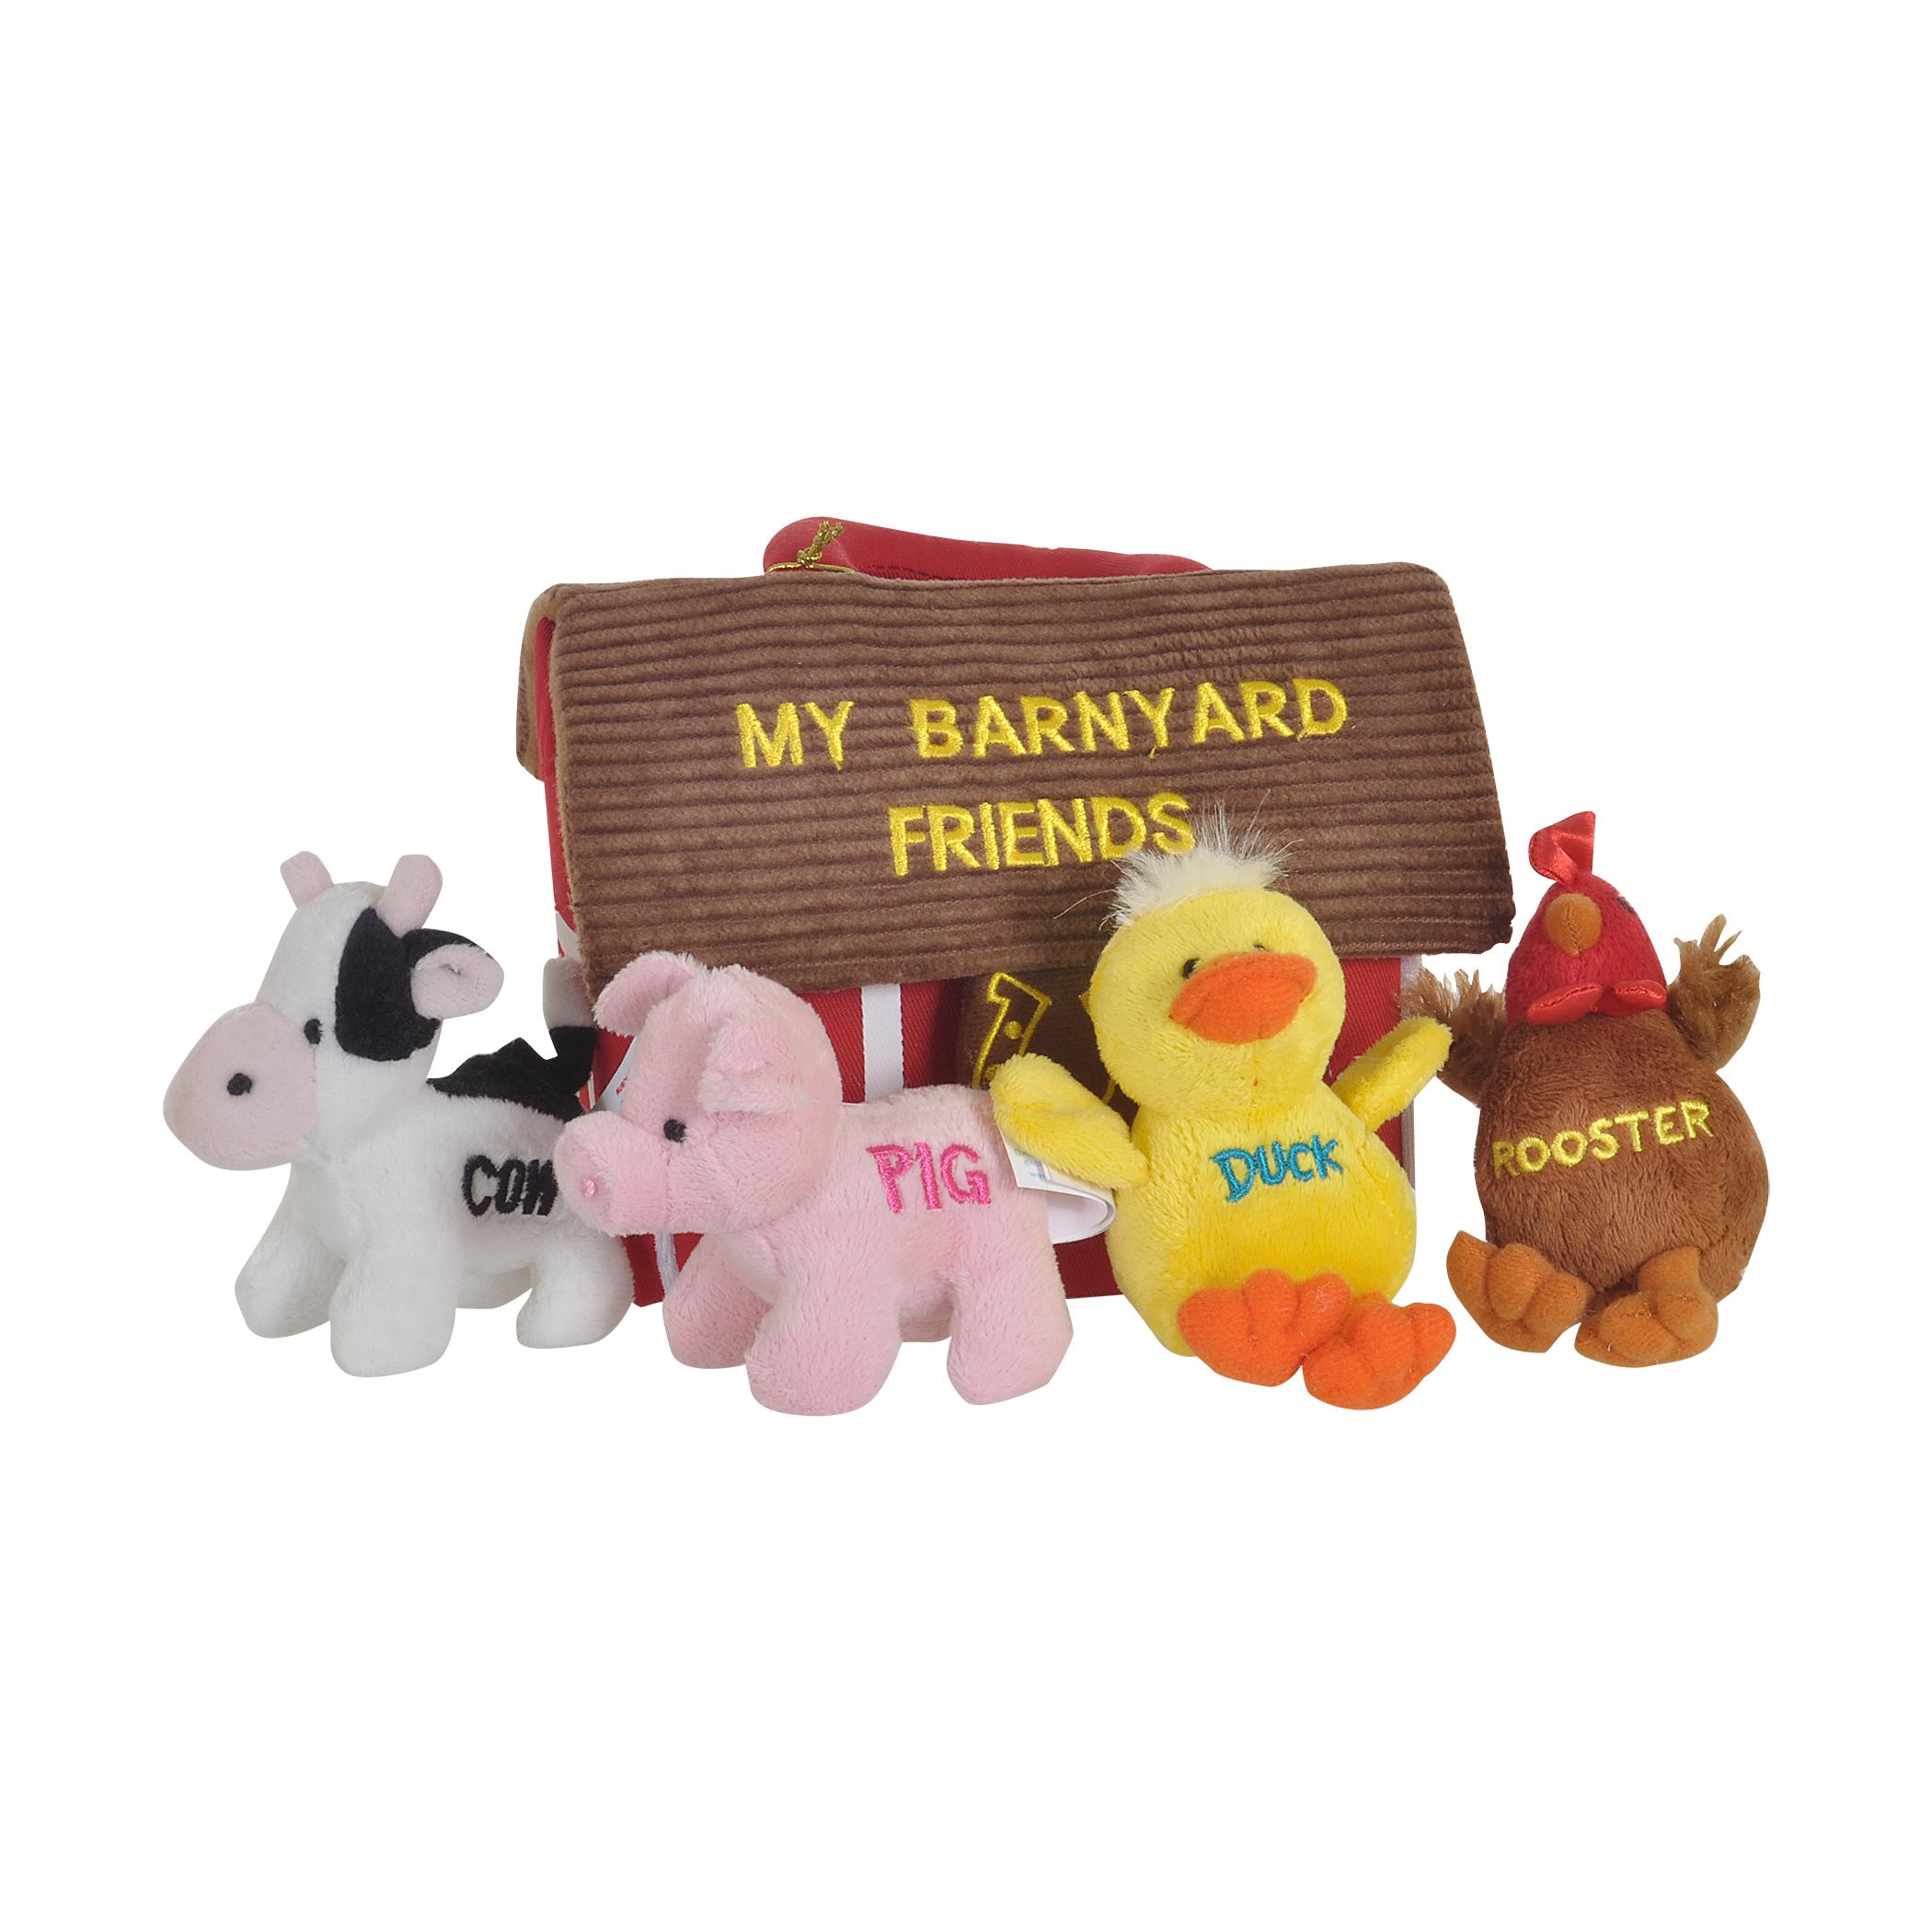  Barnyard Friends Plush Toy Playset Carrier